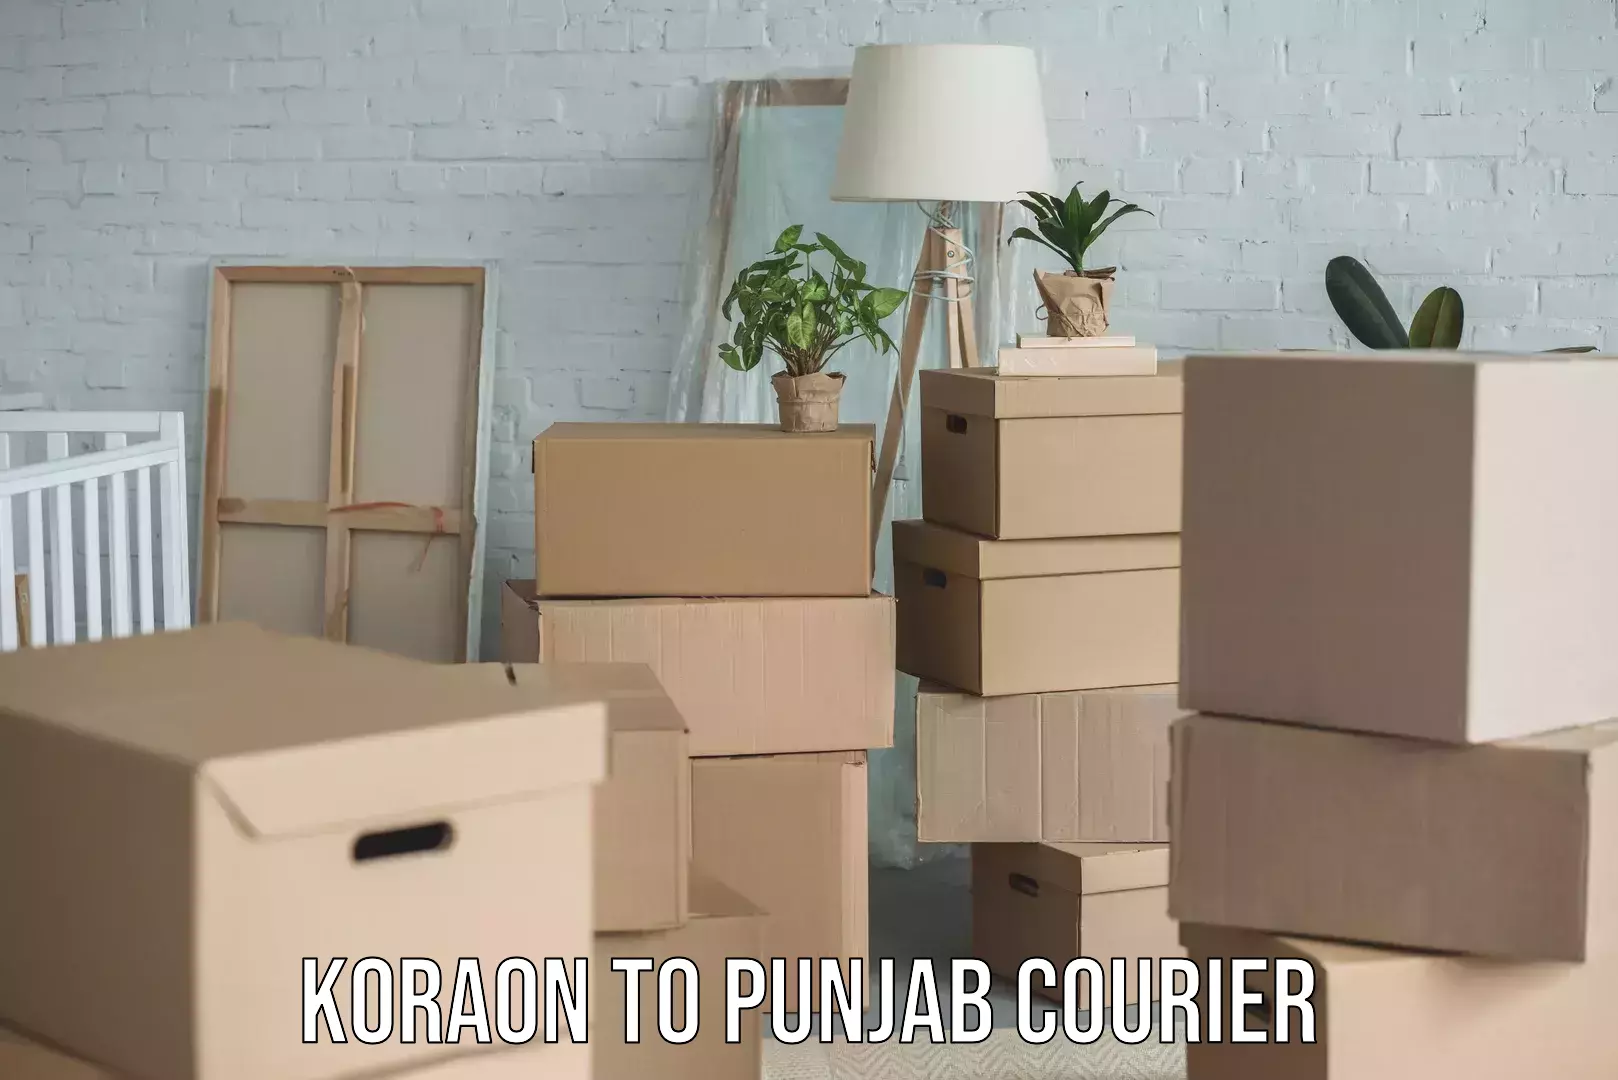 Efficient moving company Koraon to Punjab